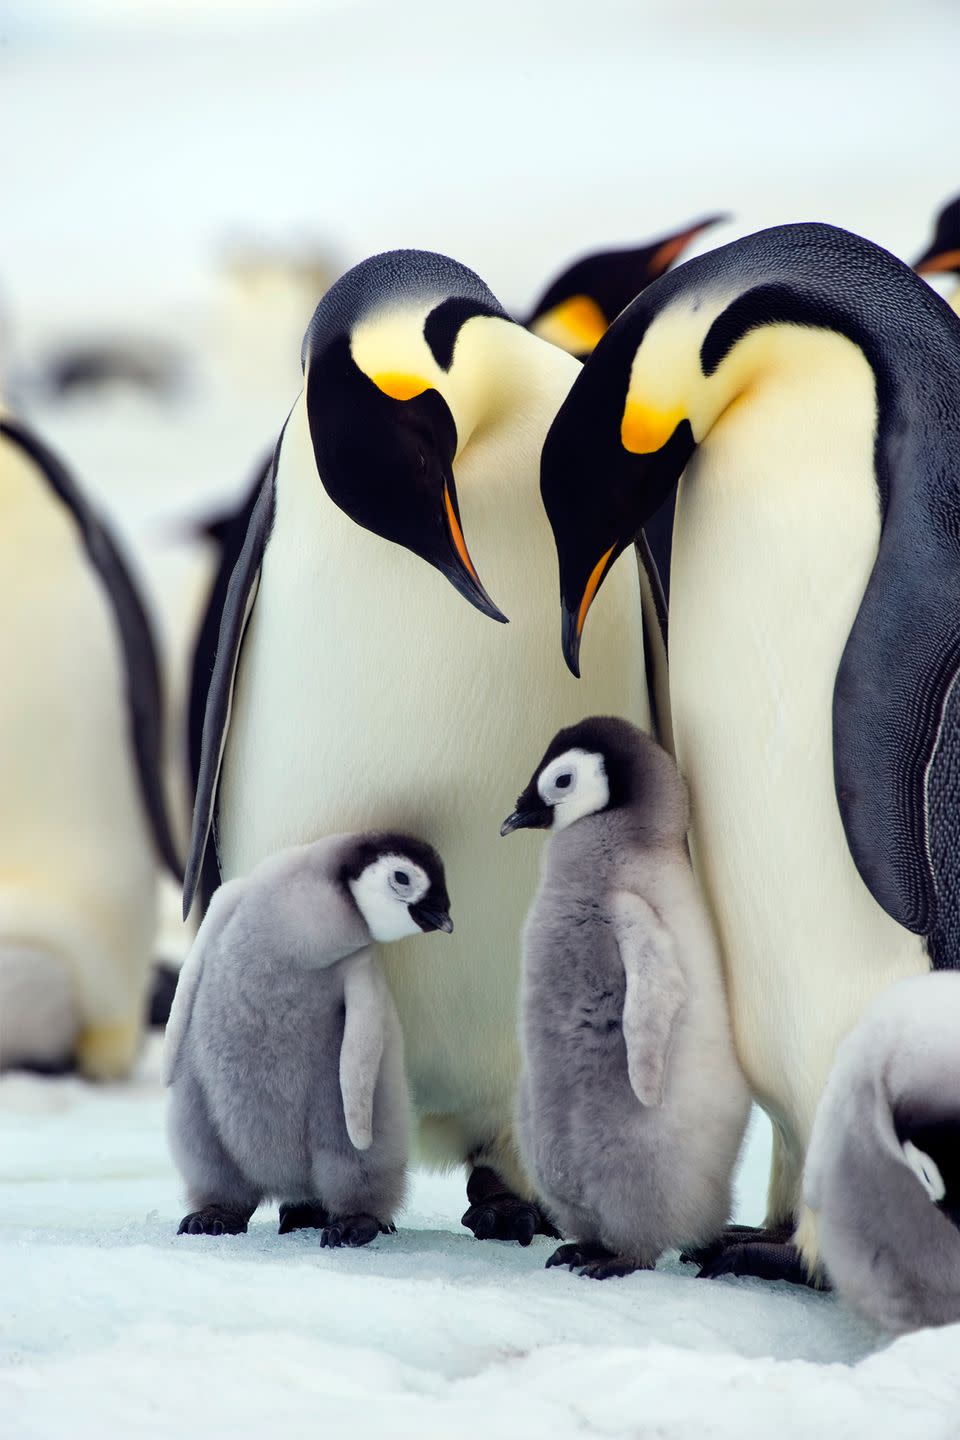 18. Emperor penguins dive really deep.